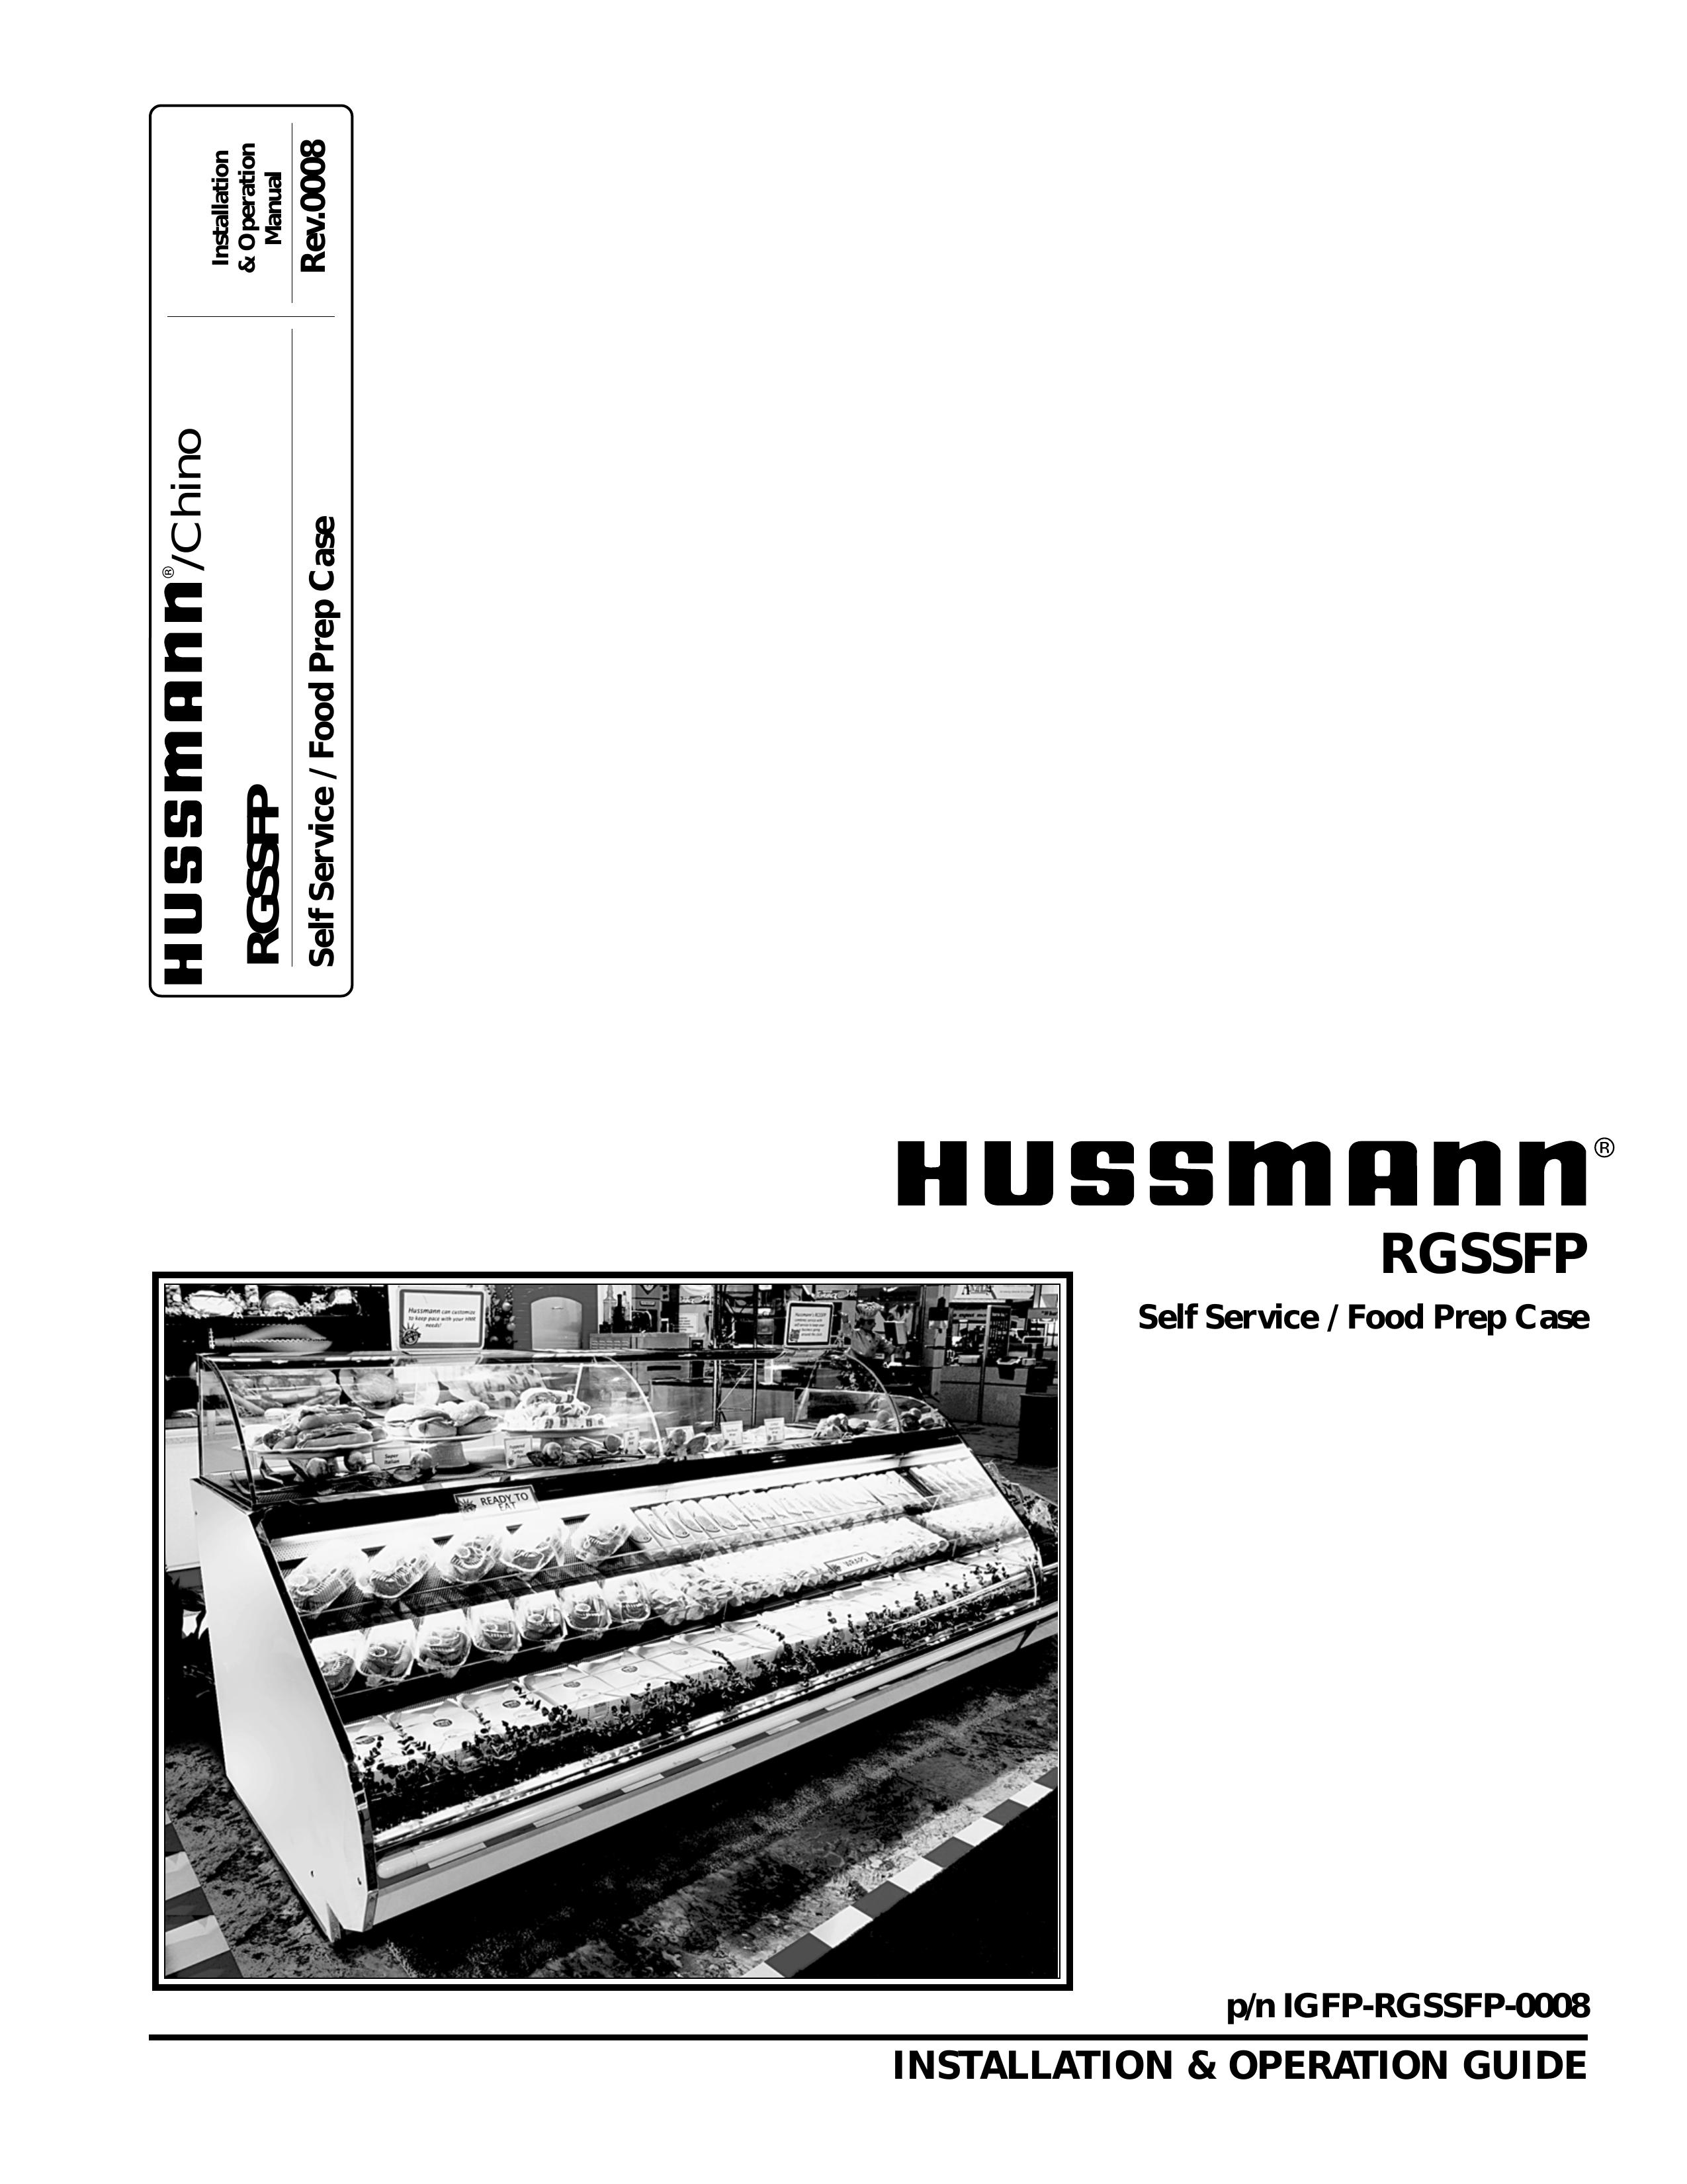 hussman RGSSFP Refrigerator User Manual